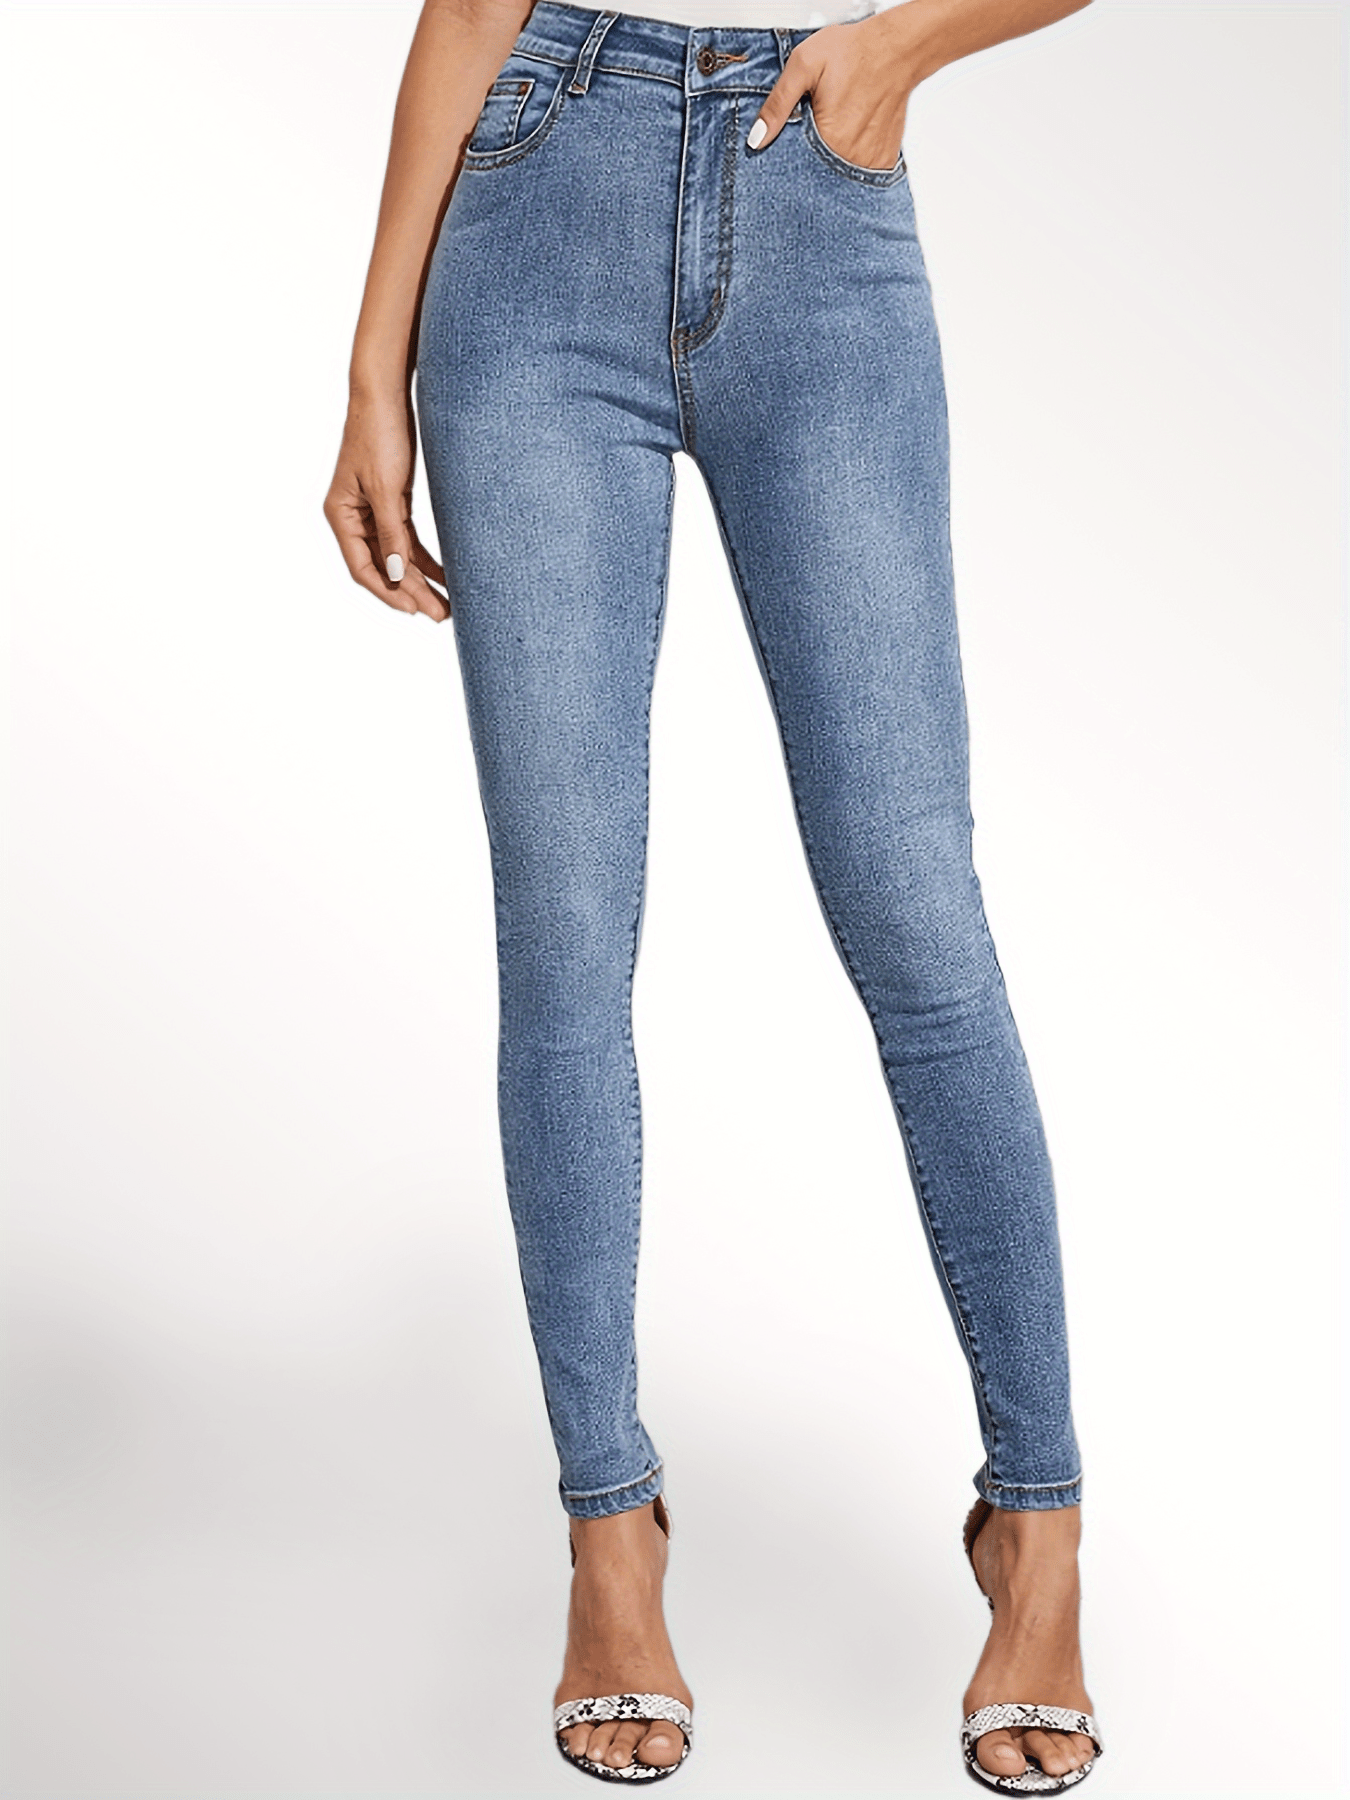 Jeans ajustados de cintura alta en azul, pantalones de mezclilla estilo  callejero ultra desgastados y de alta elasticidad, jeans de mezclilla y  ropa p